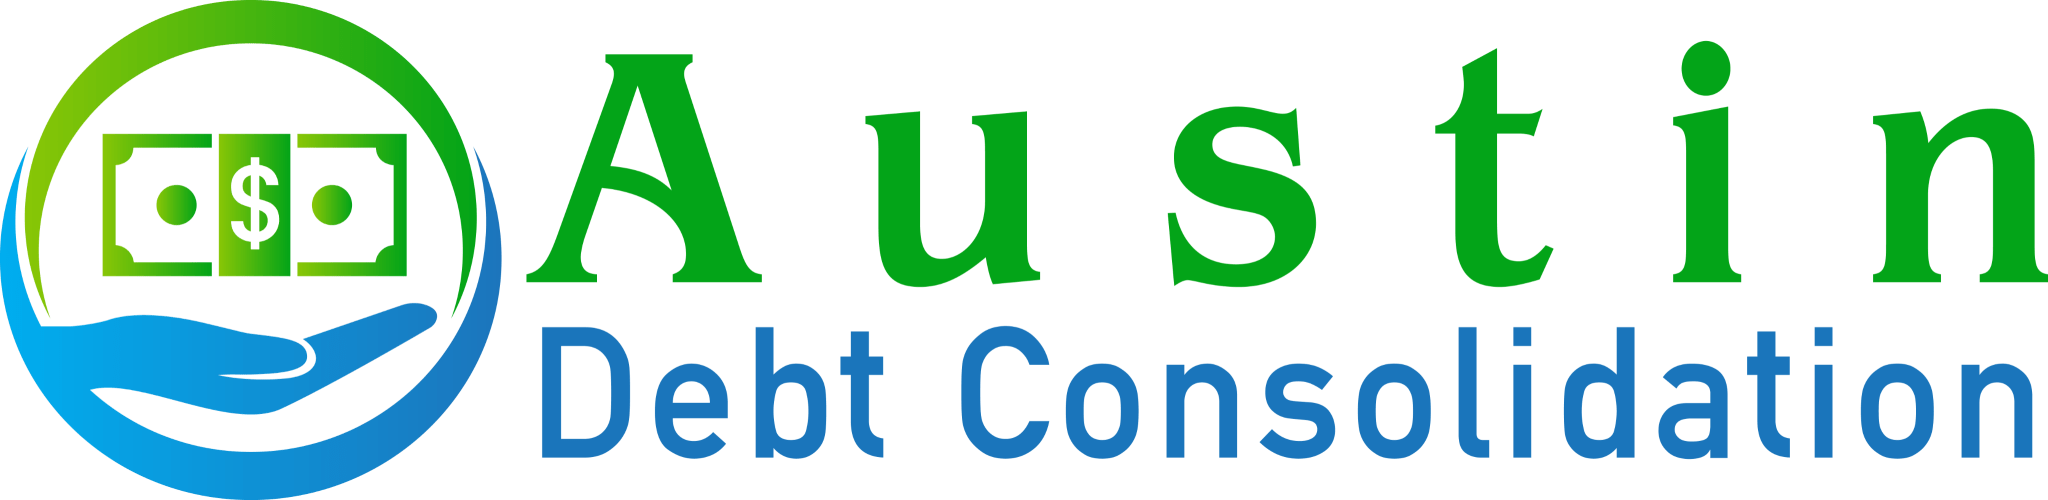 Debt Consolidation in Austin